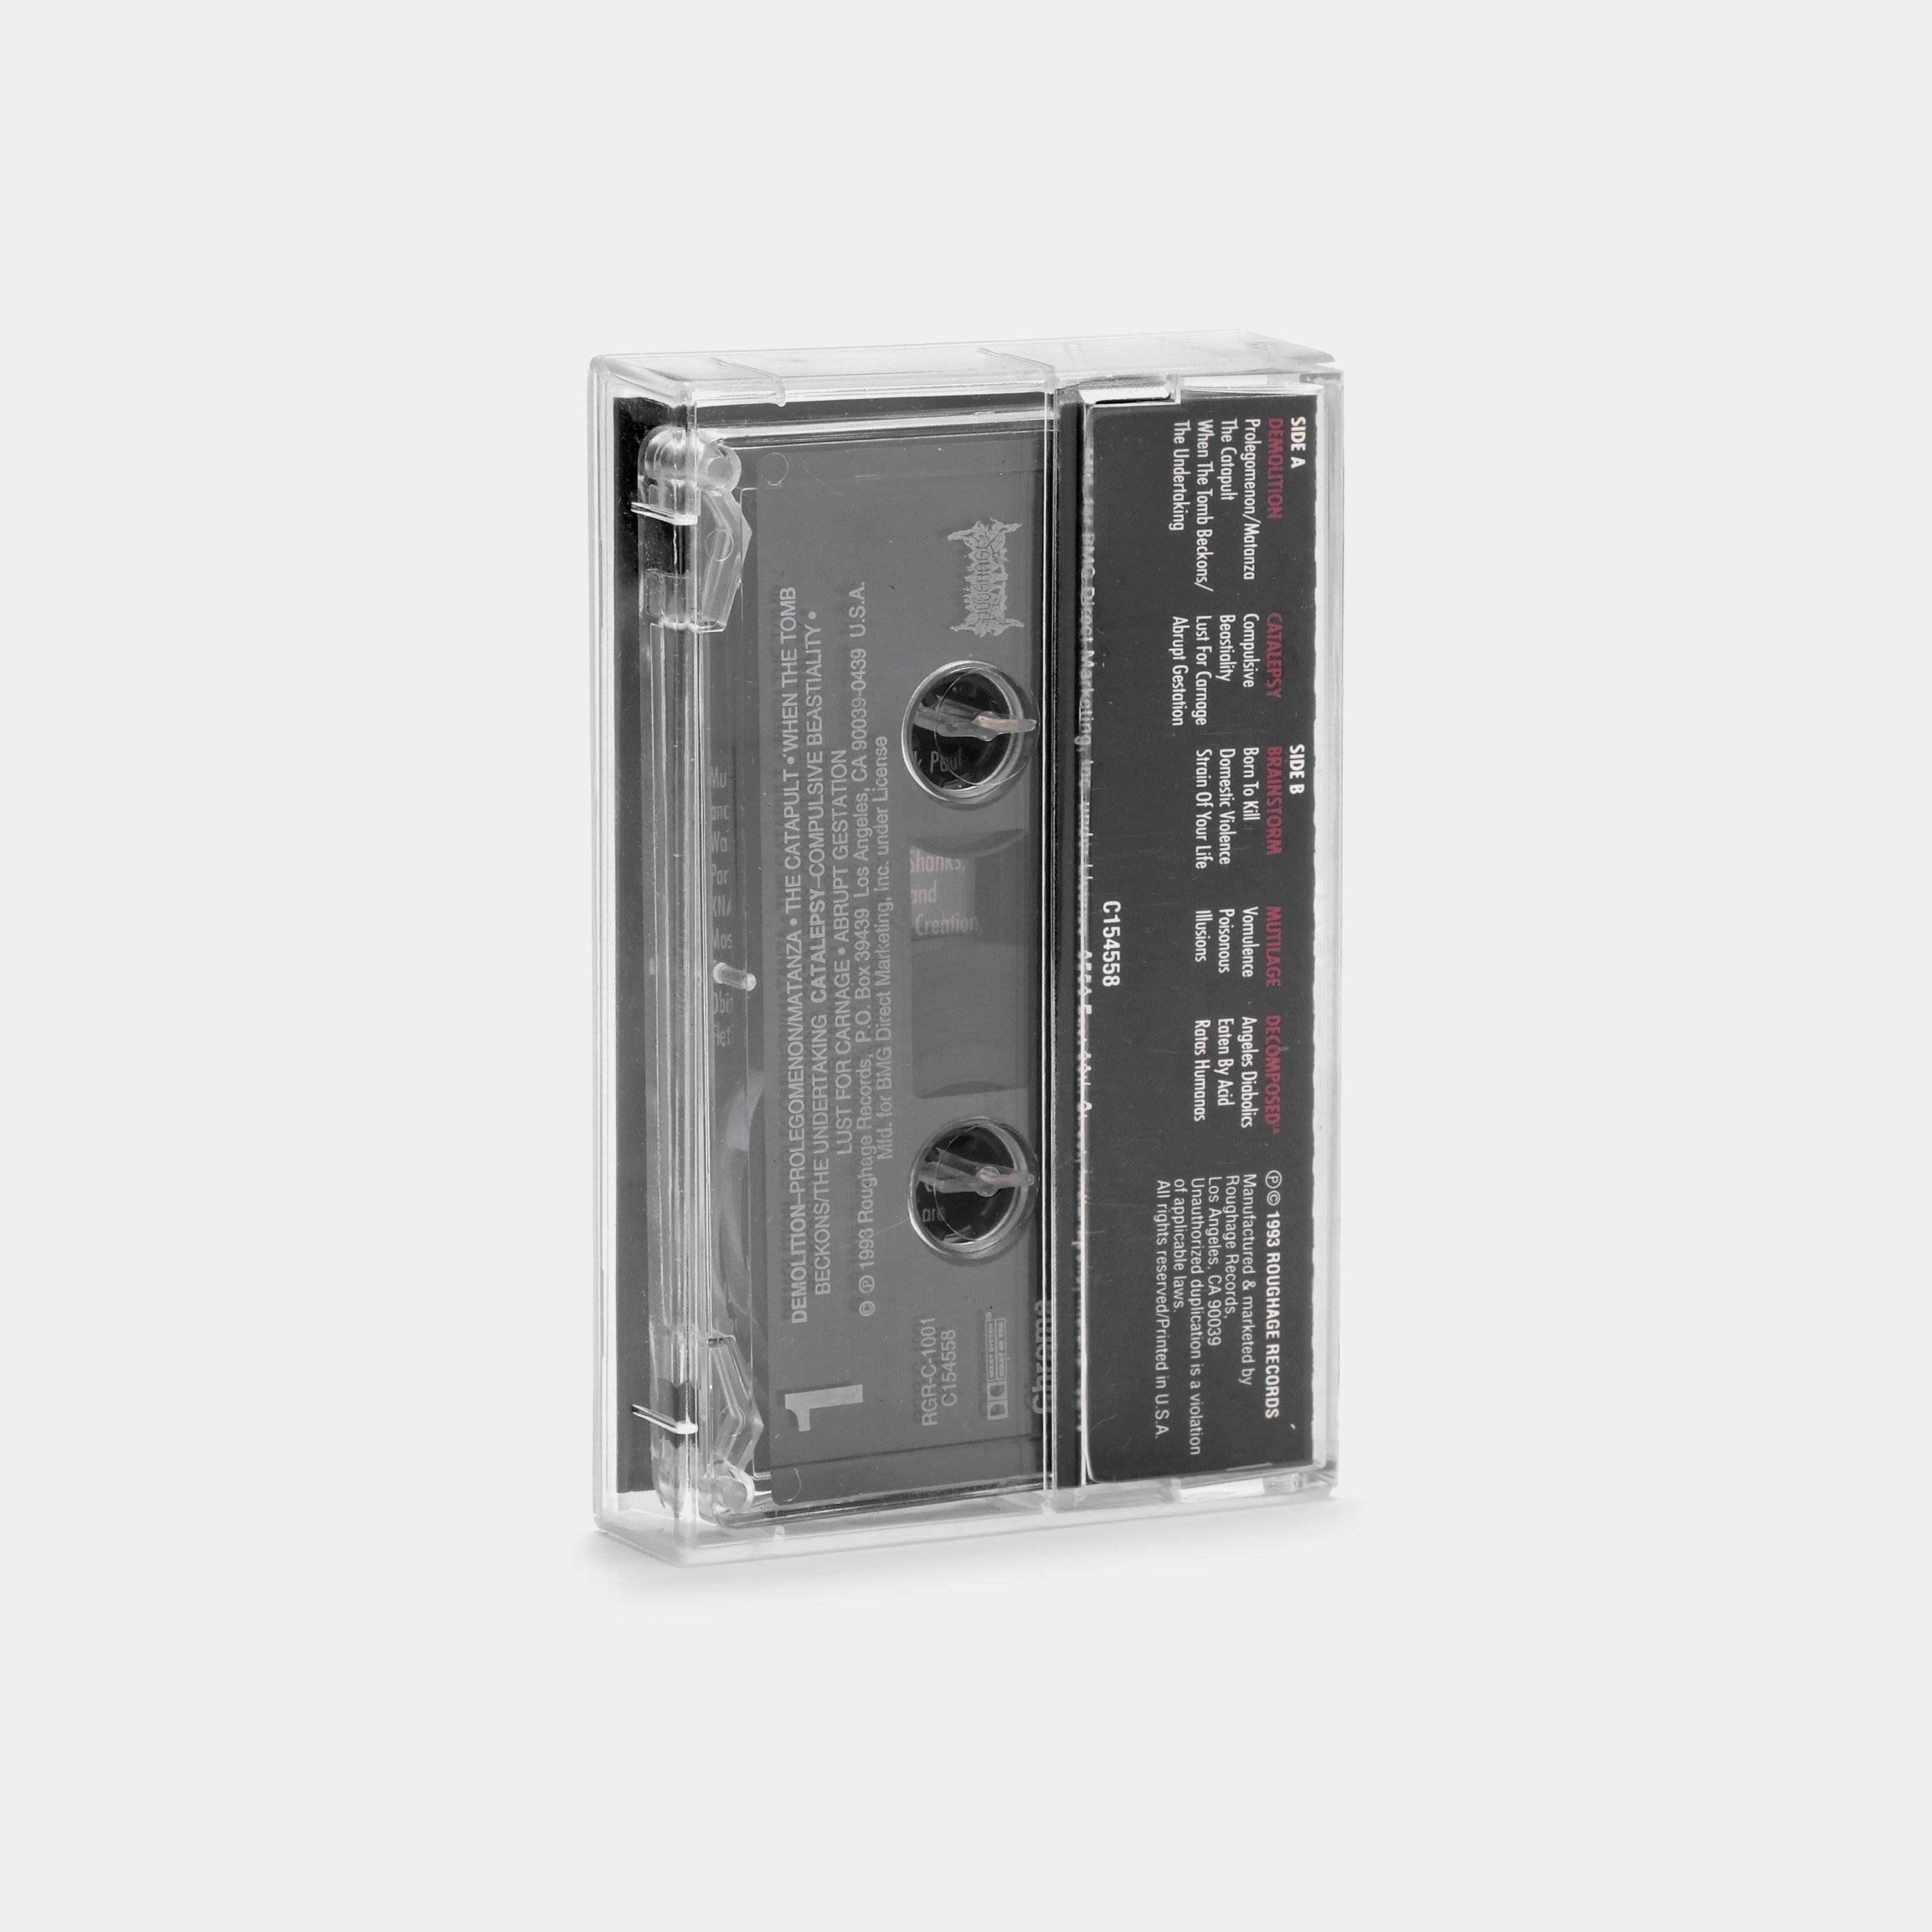 The Heralds Of Oblivion Vol 1 Cassette Tape